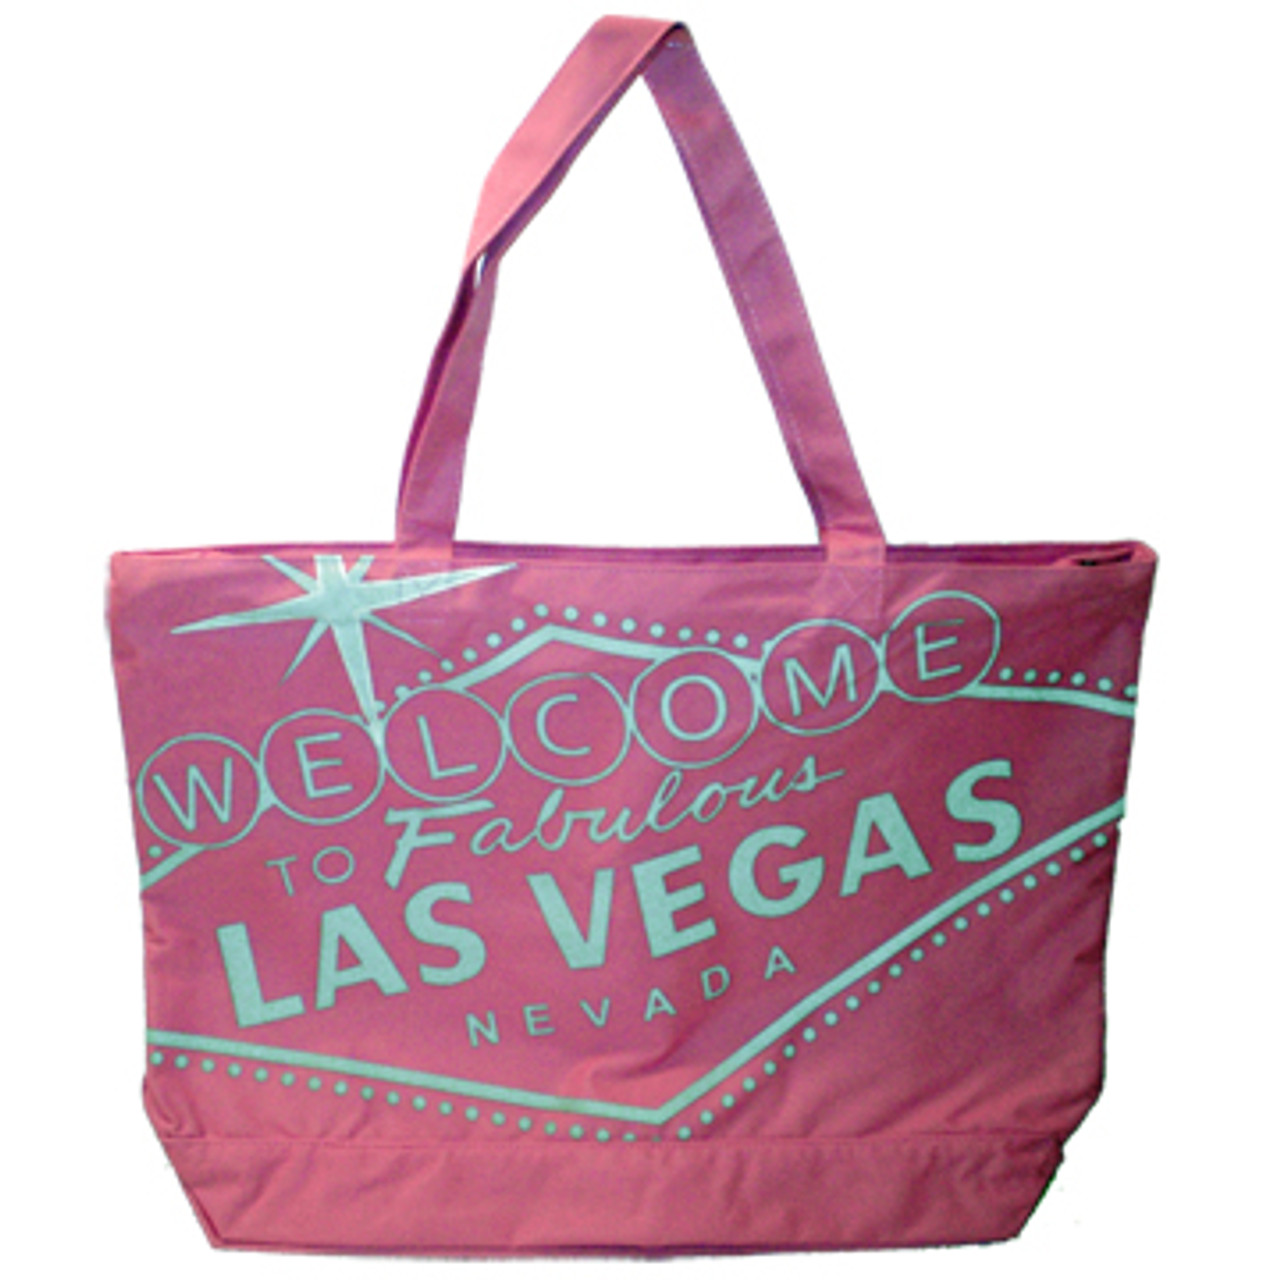 S pink canvas shopper bag